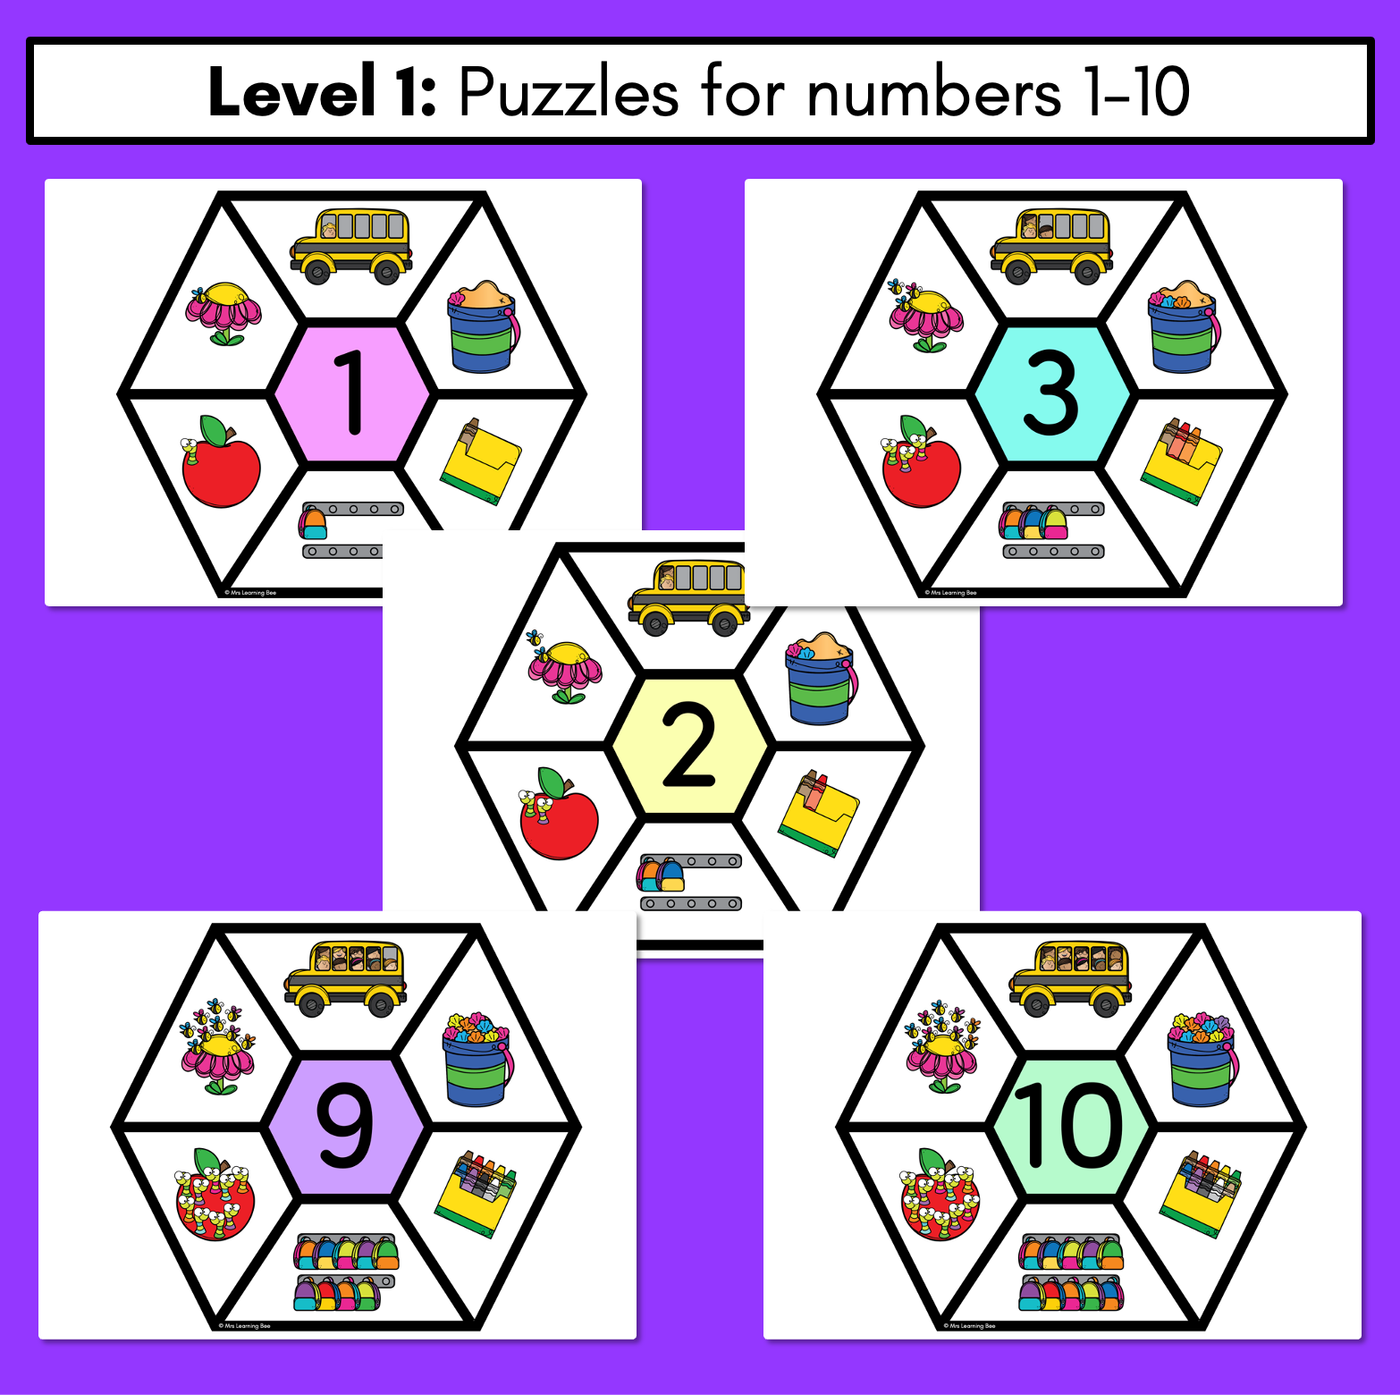 Number Hexagons 1-20 - Kindergarten Maths Puzzle with number pictures